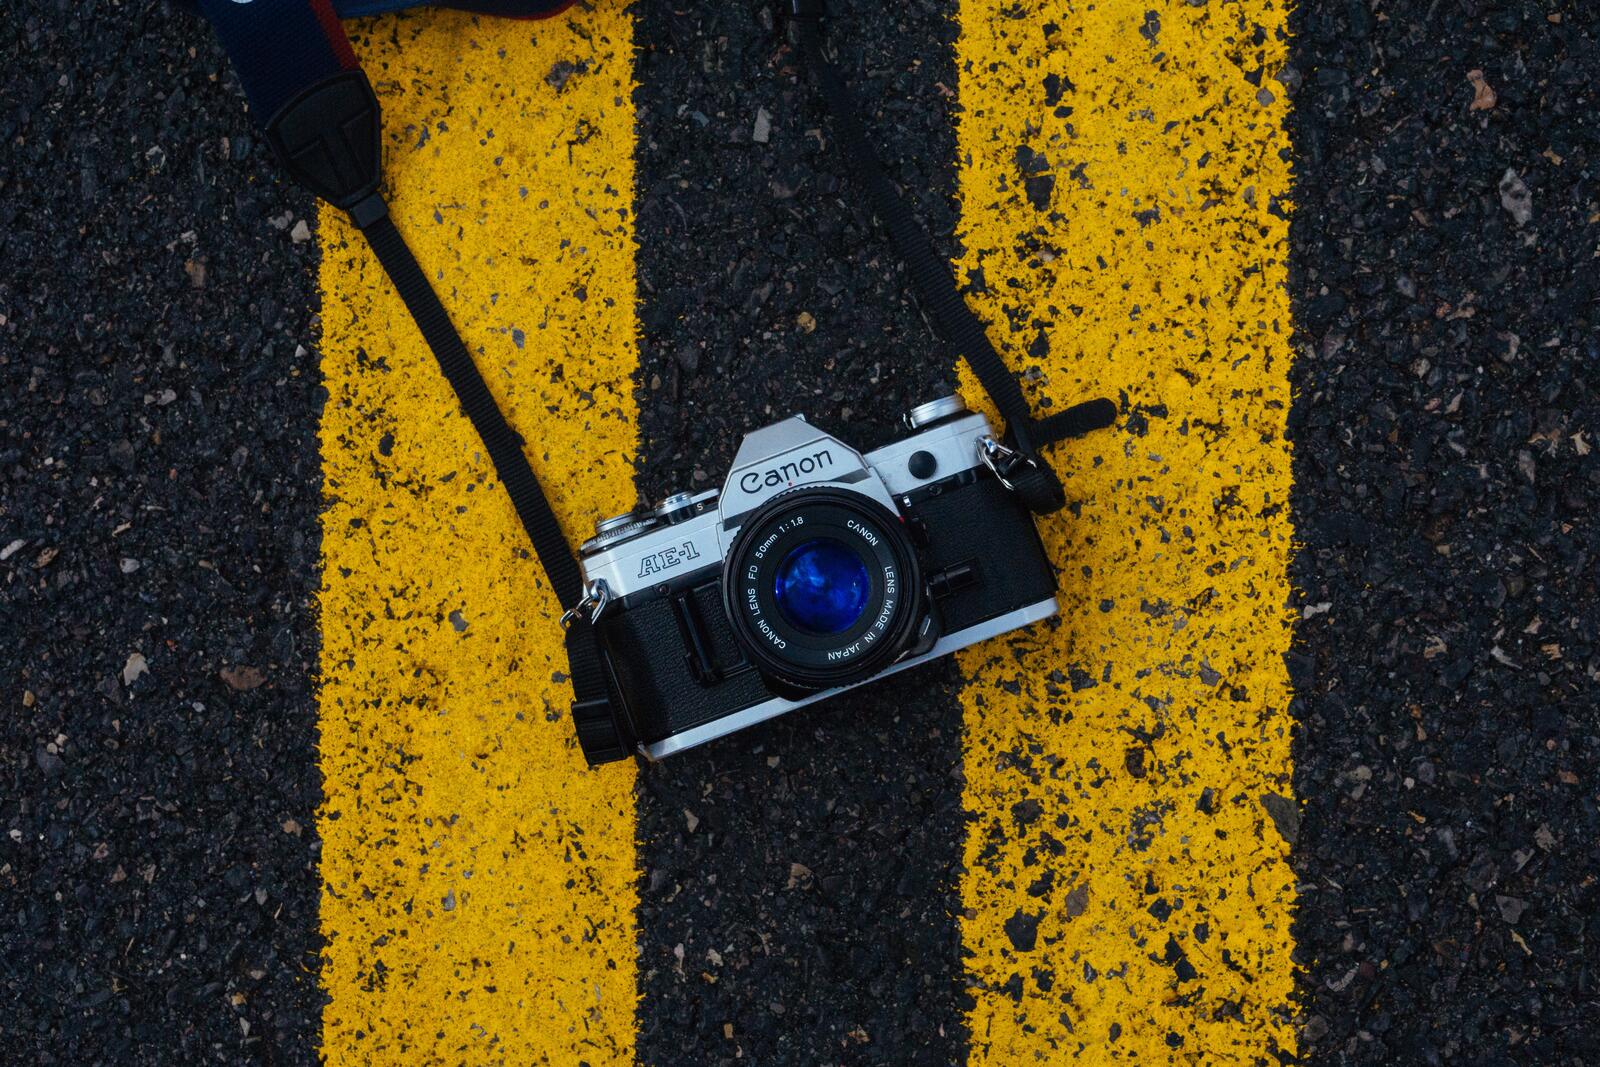 Free photo A single-lens reflex camera lying on the pavement